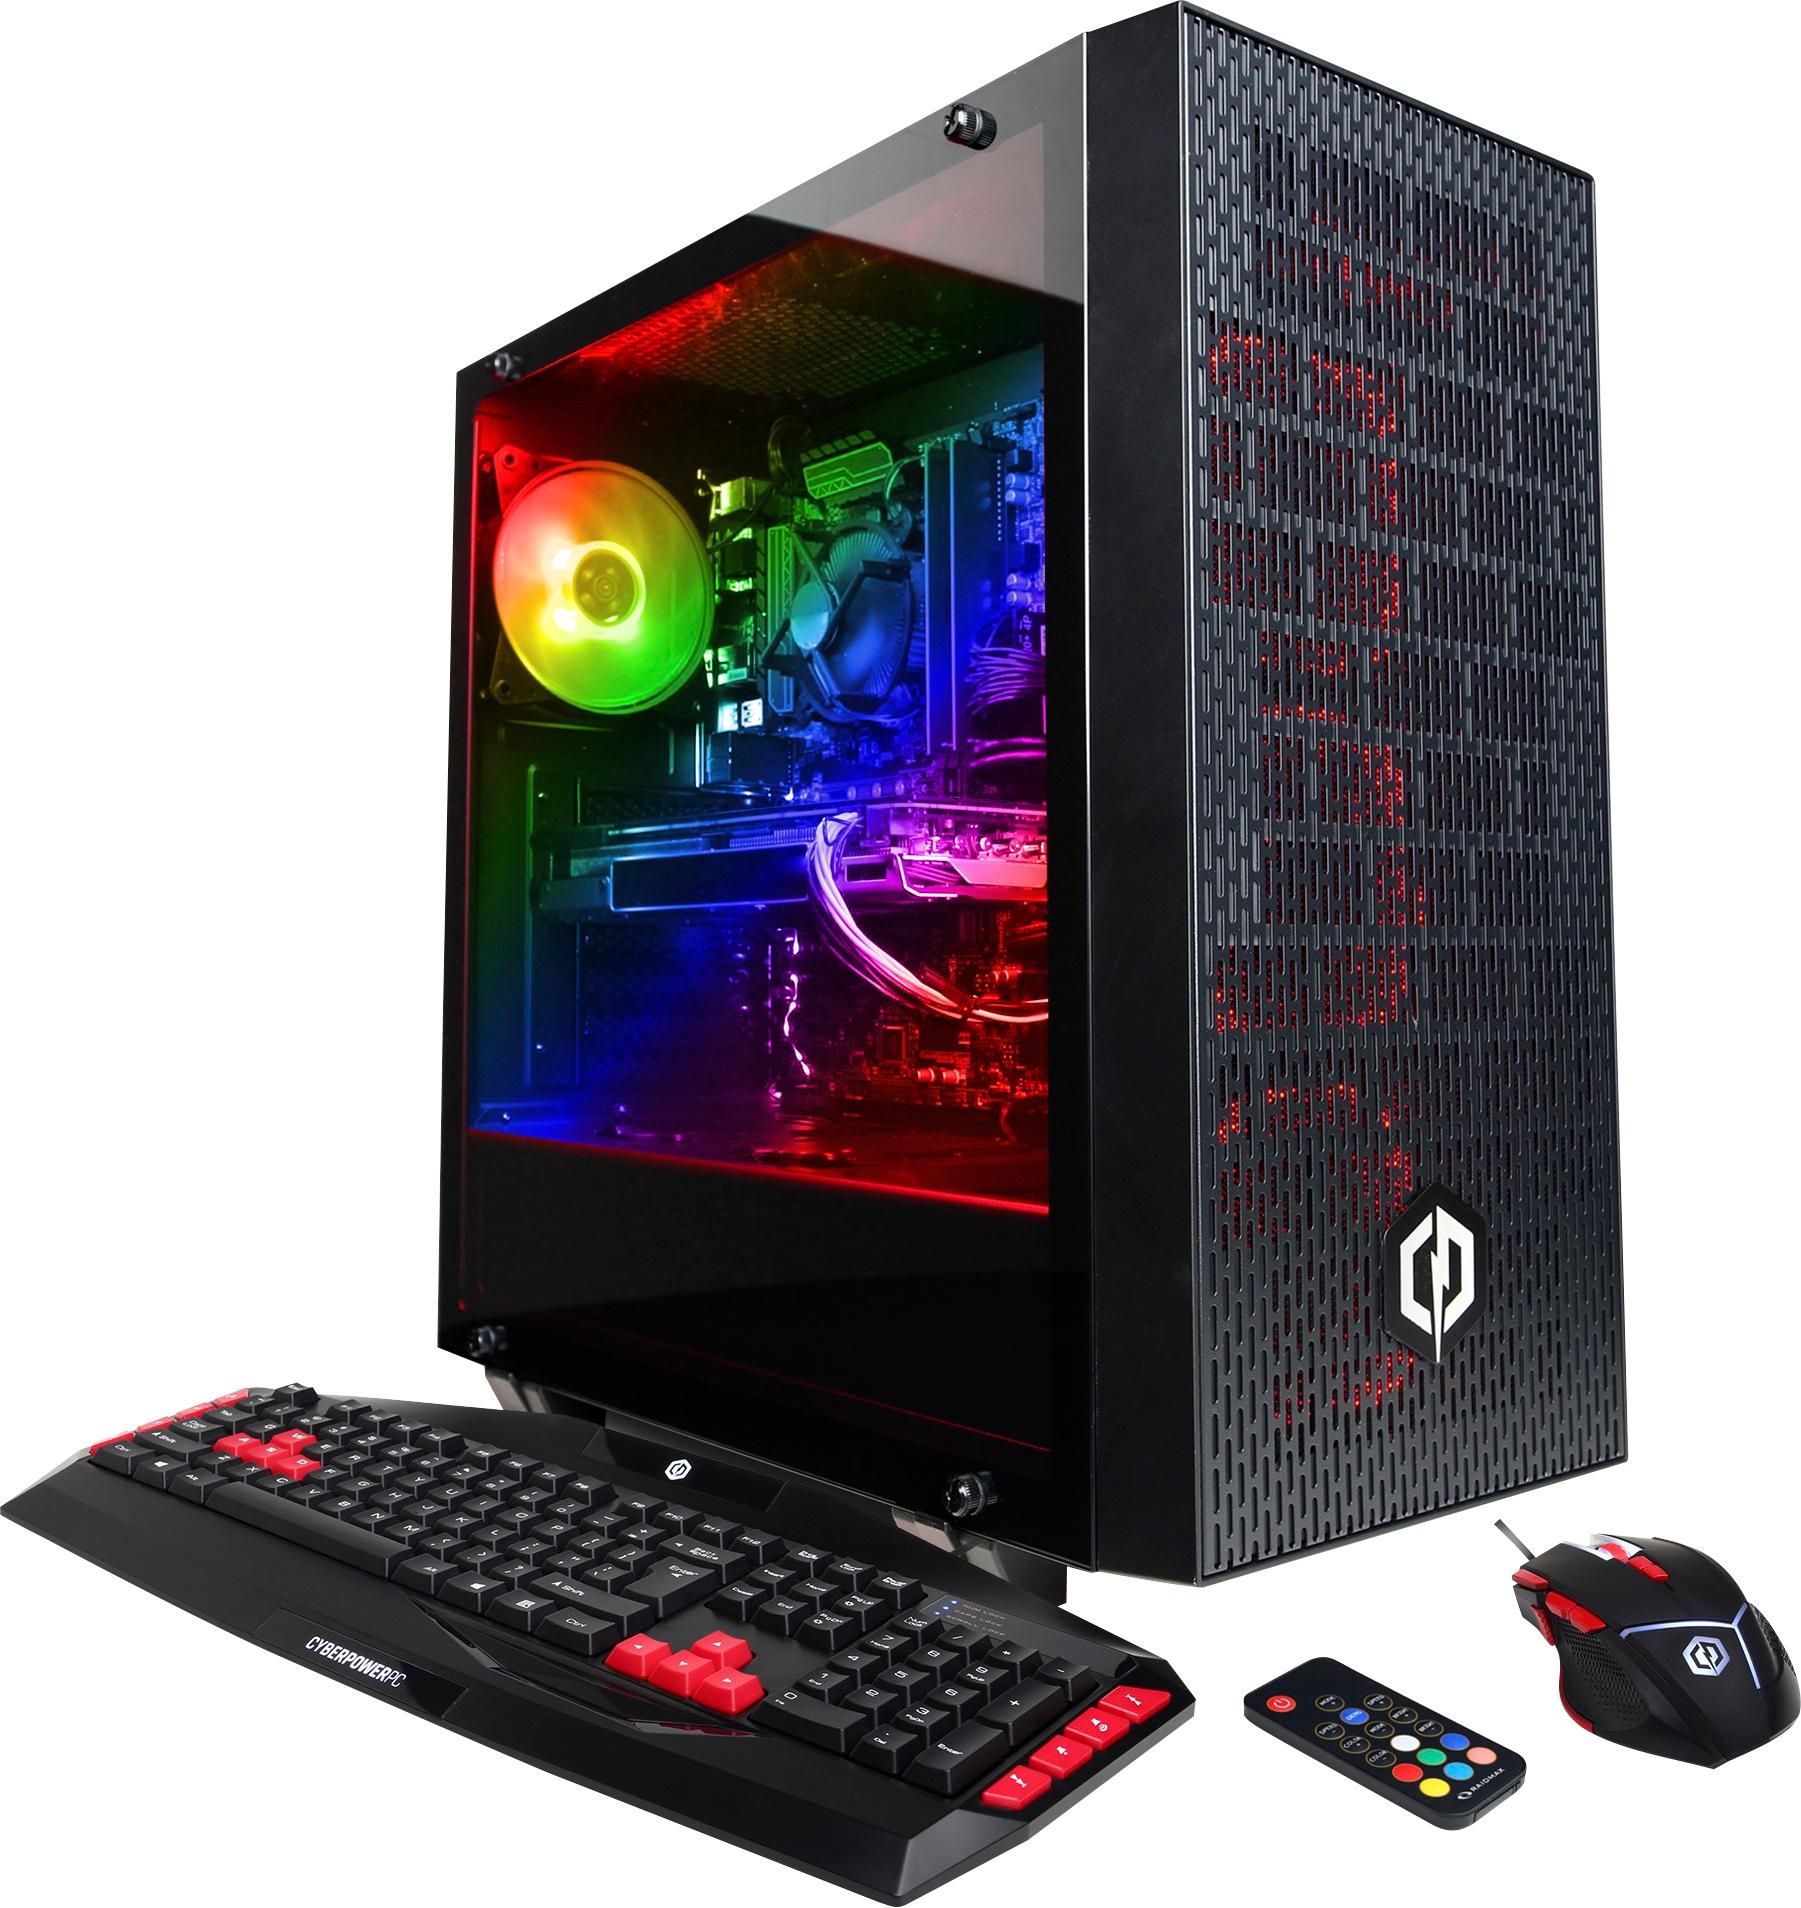 PC/タブレット デスクトップ型PC Best Buy: CyberPowerPC Gamer Xtreme VR Desktop Intel Core i7-7700K 